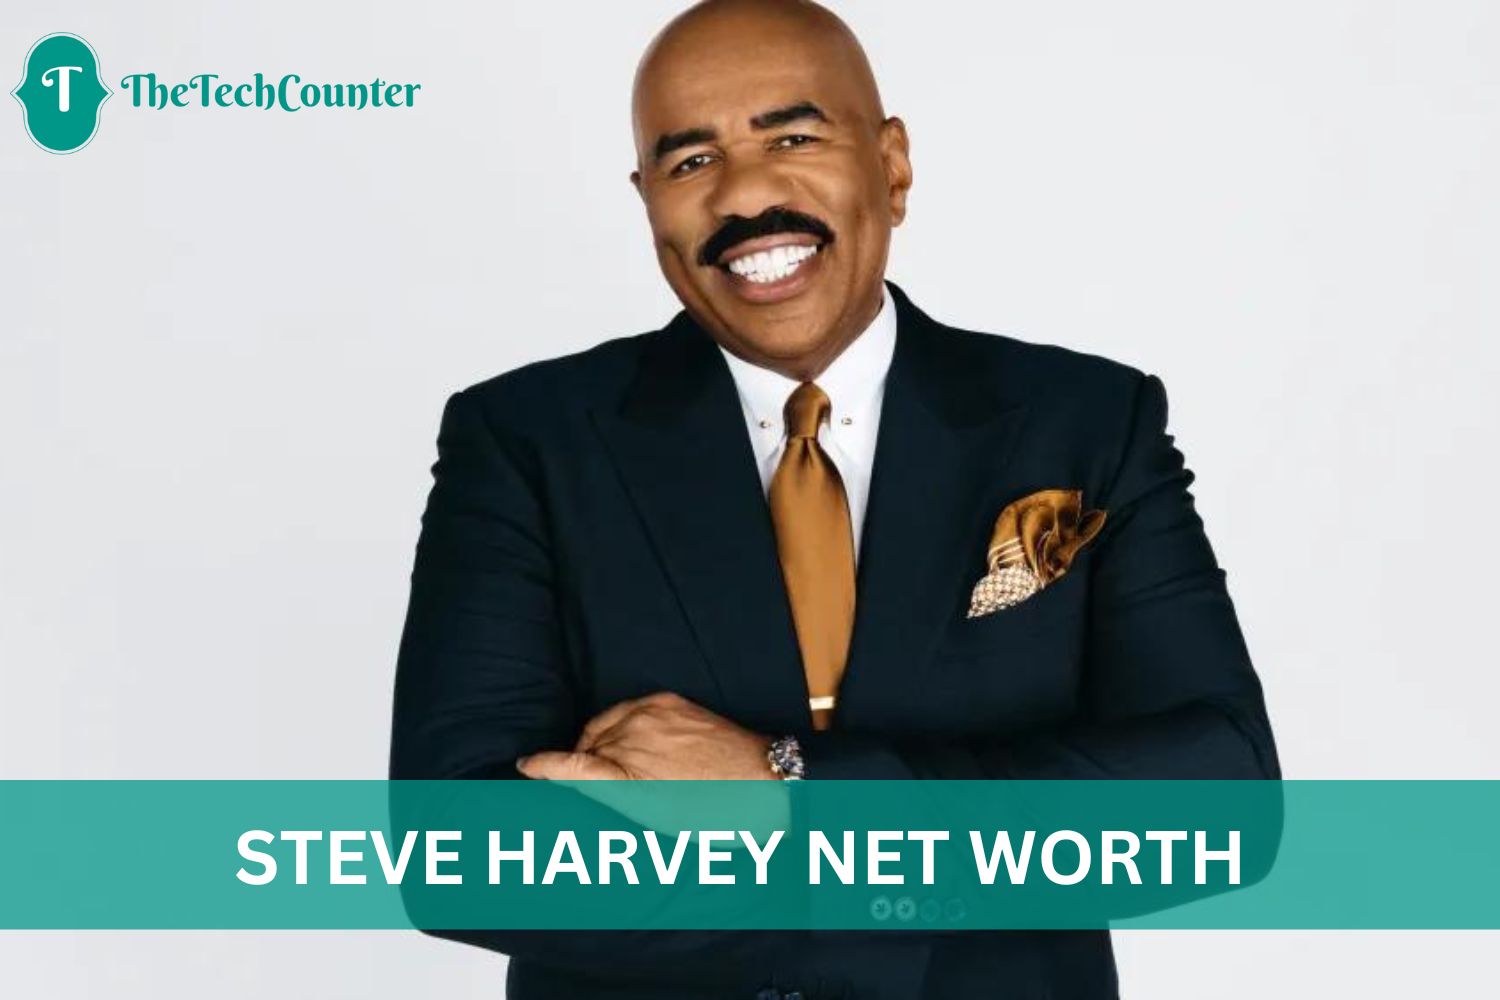 Steve Harvey net worth